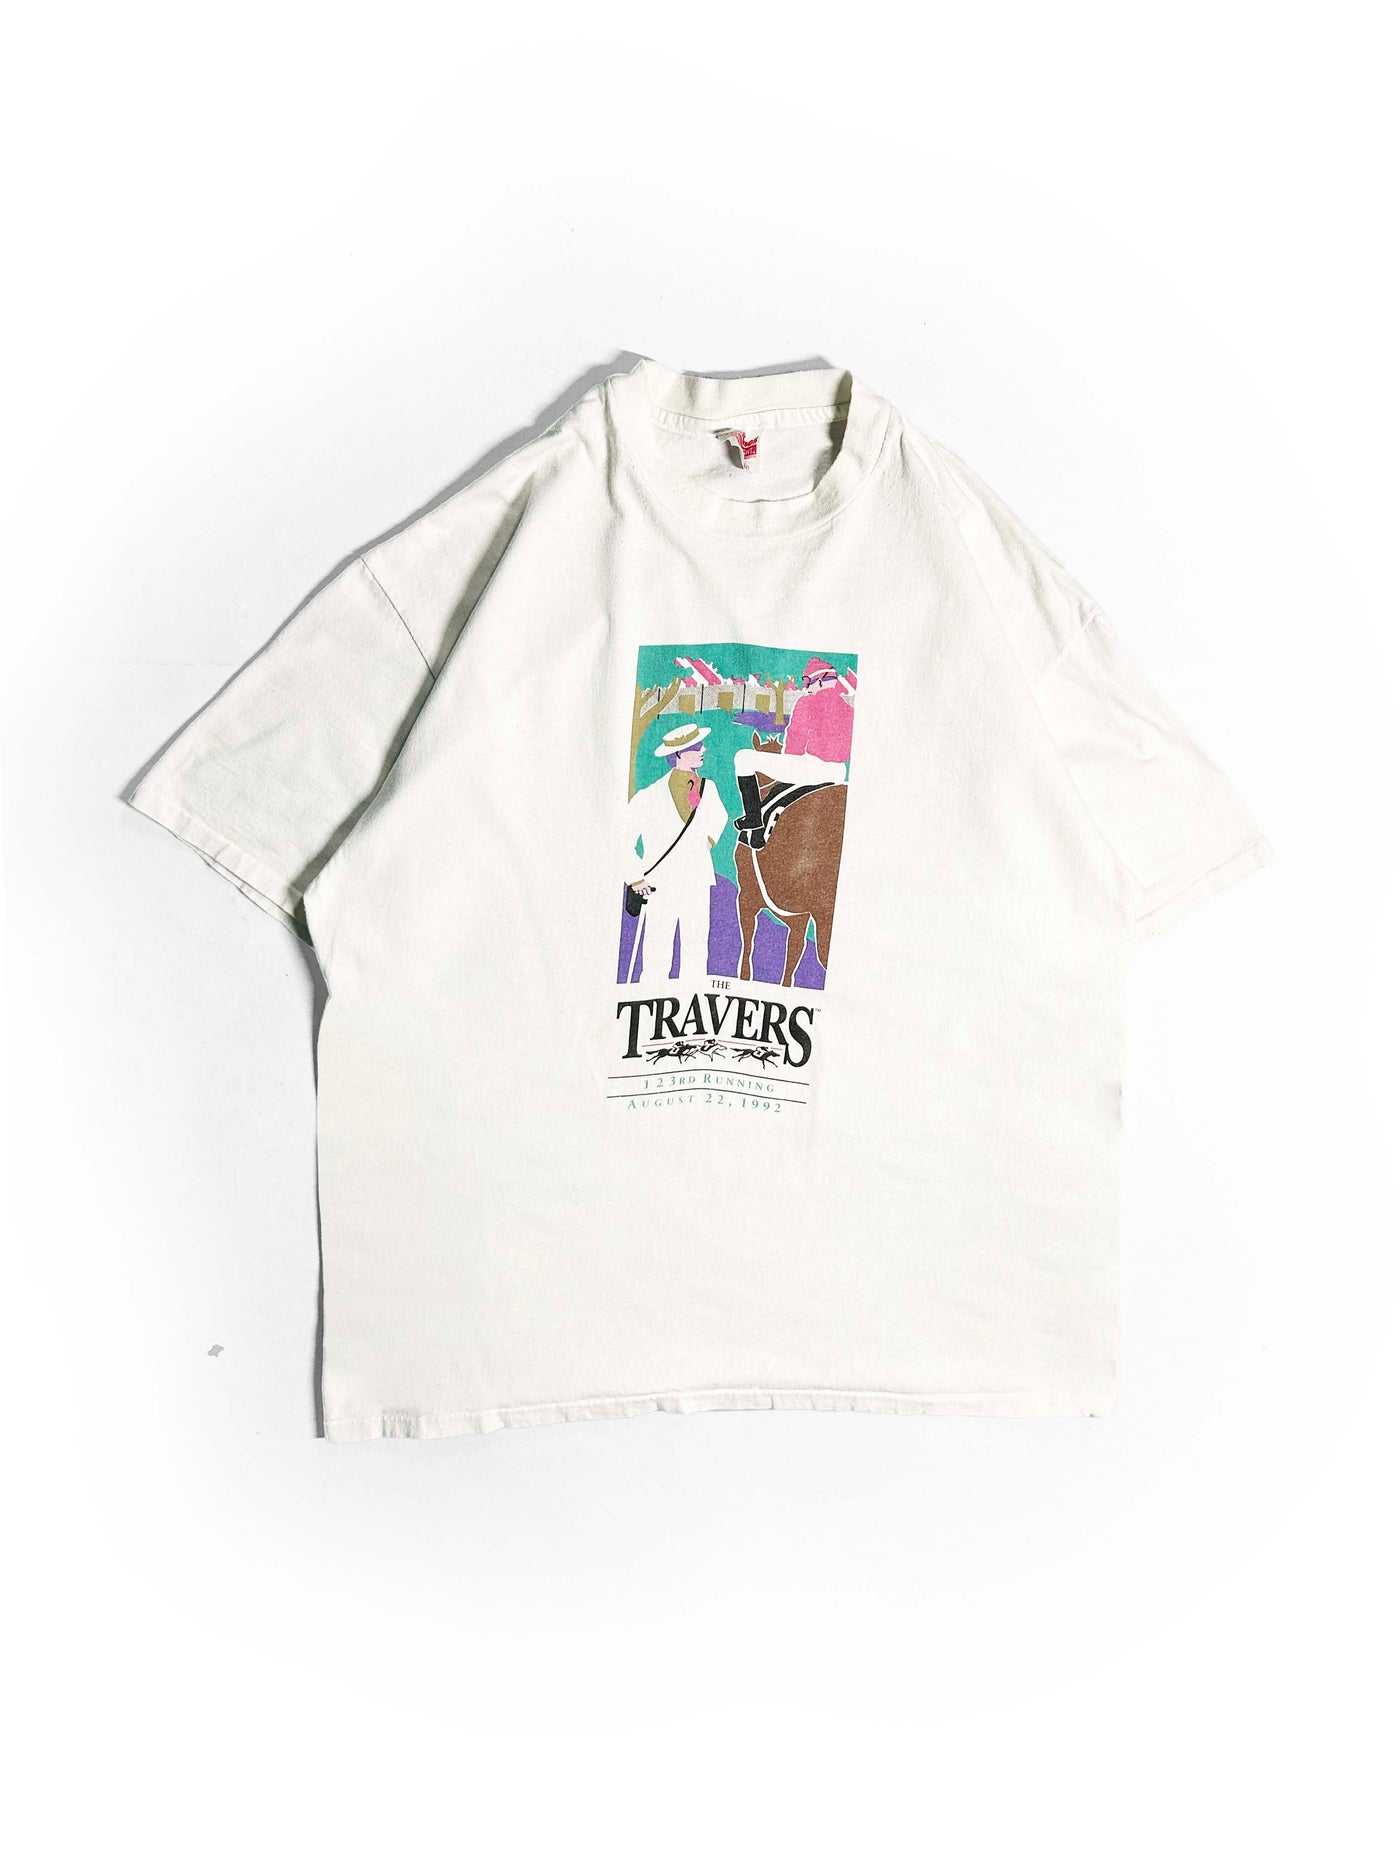 Vintage 1992 Travers Day Saratoga T-Shirt